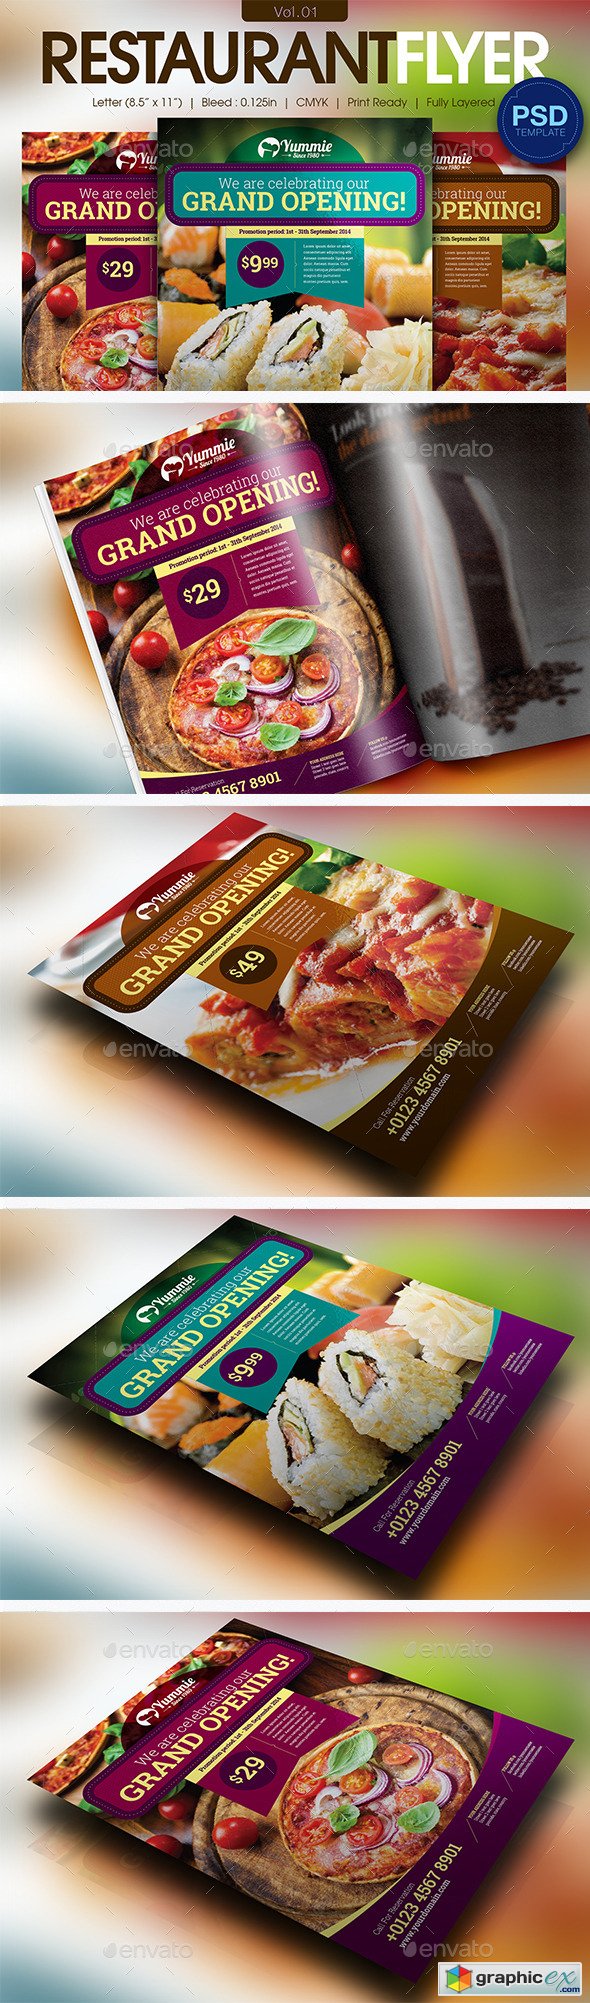 Restaurant Flyer Vol01